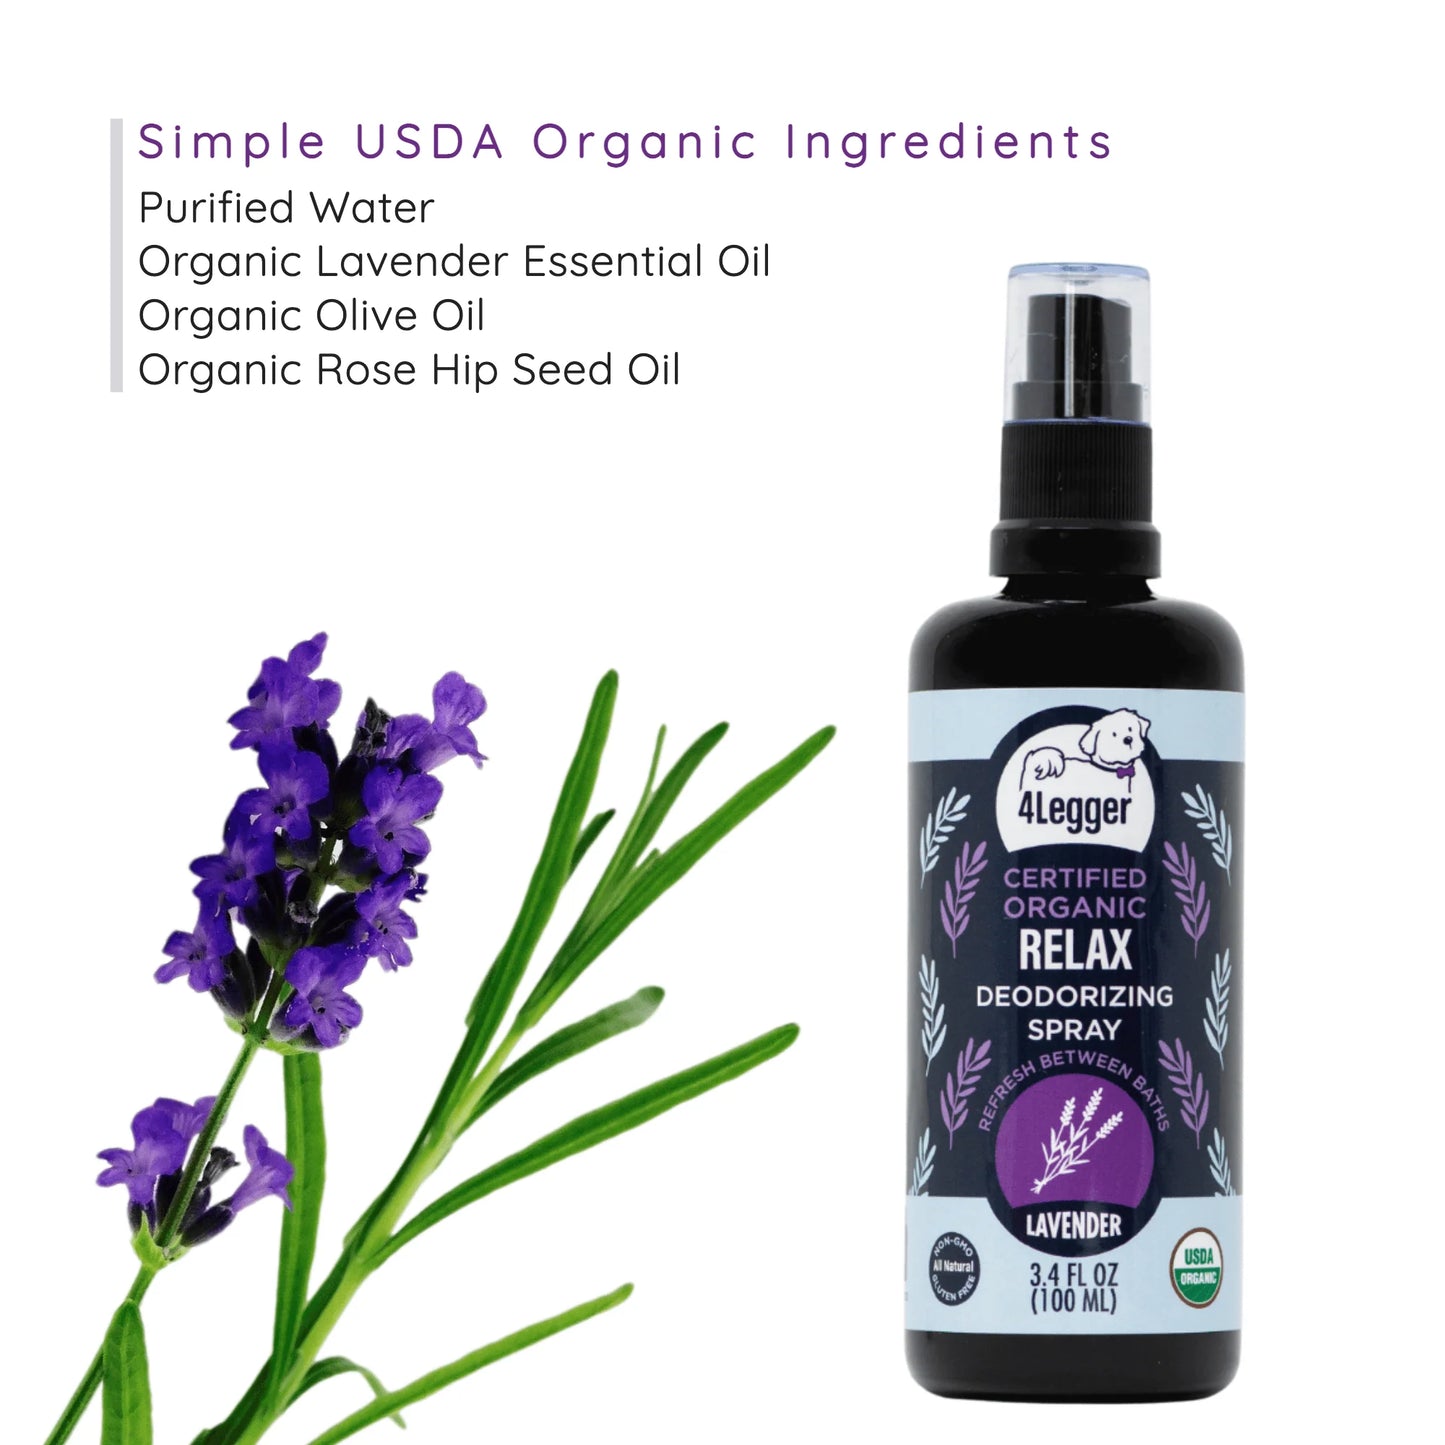 Broluxe Ltd. Co. XL American Bully 4-Legger RELAX - Deodorizing Spray - Lavender - USDA Certified Organic